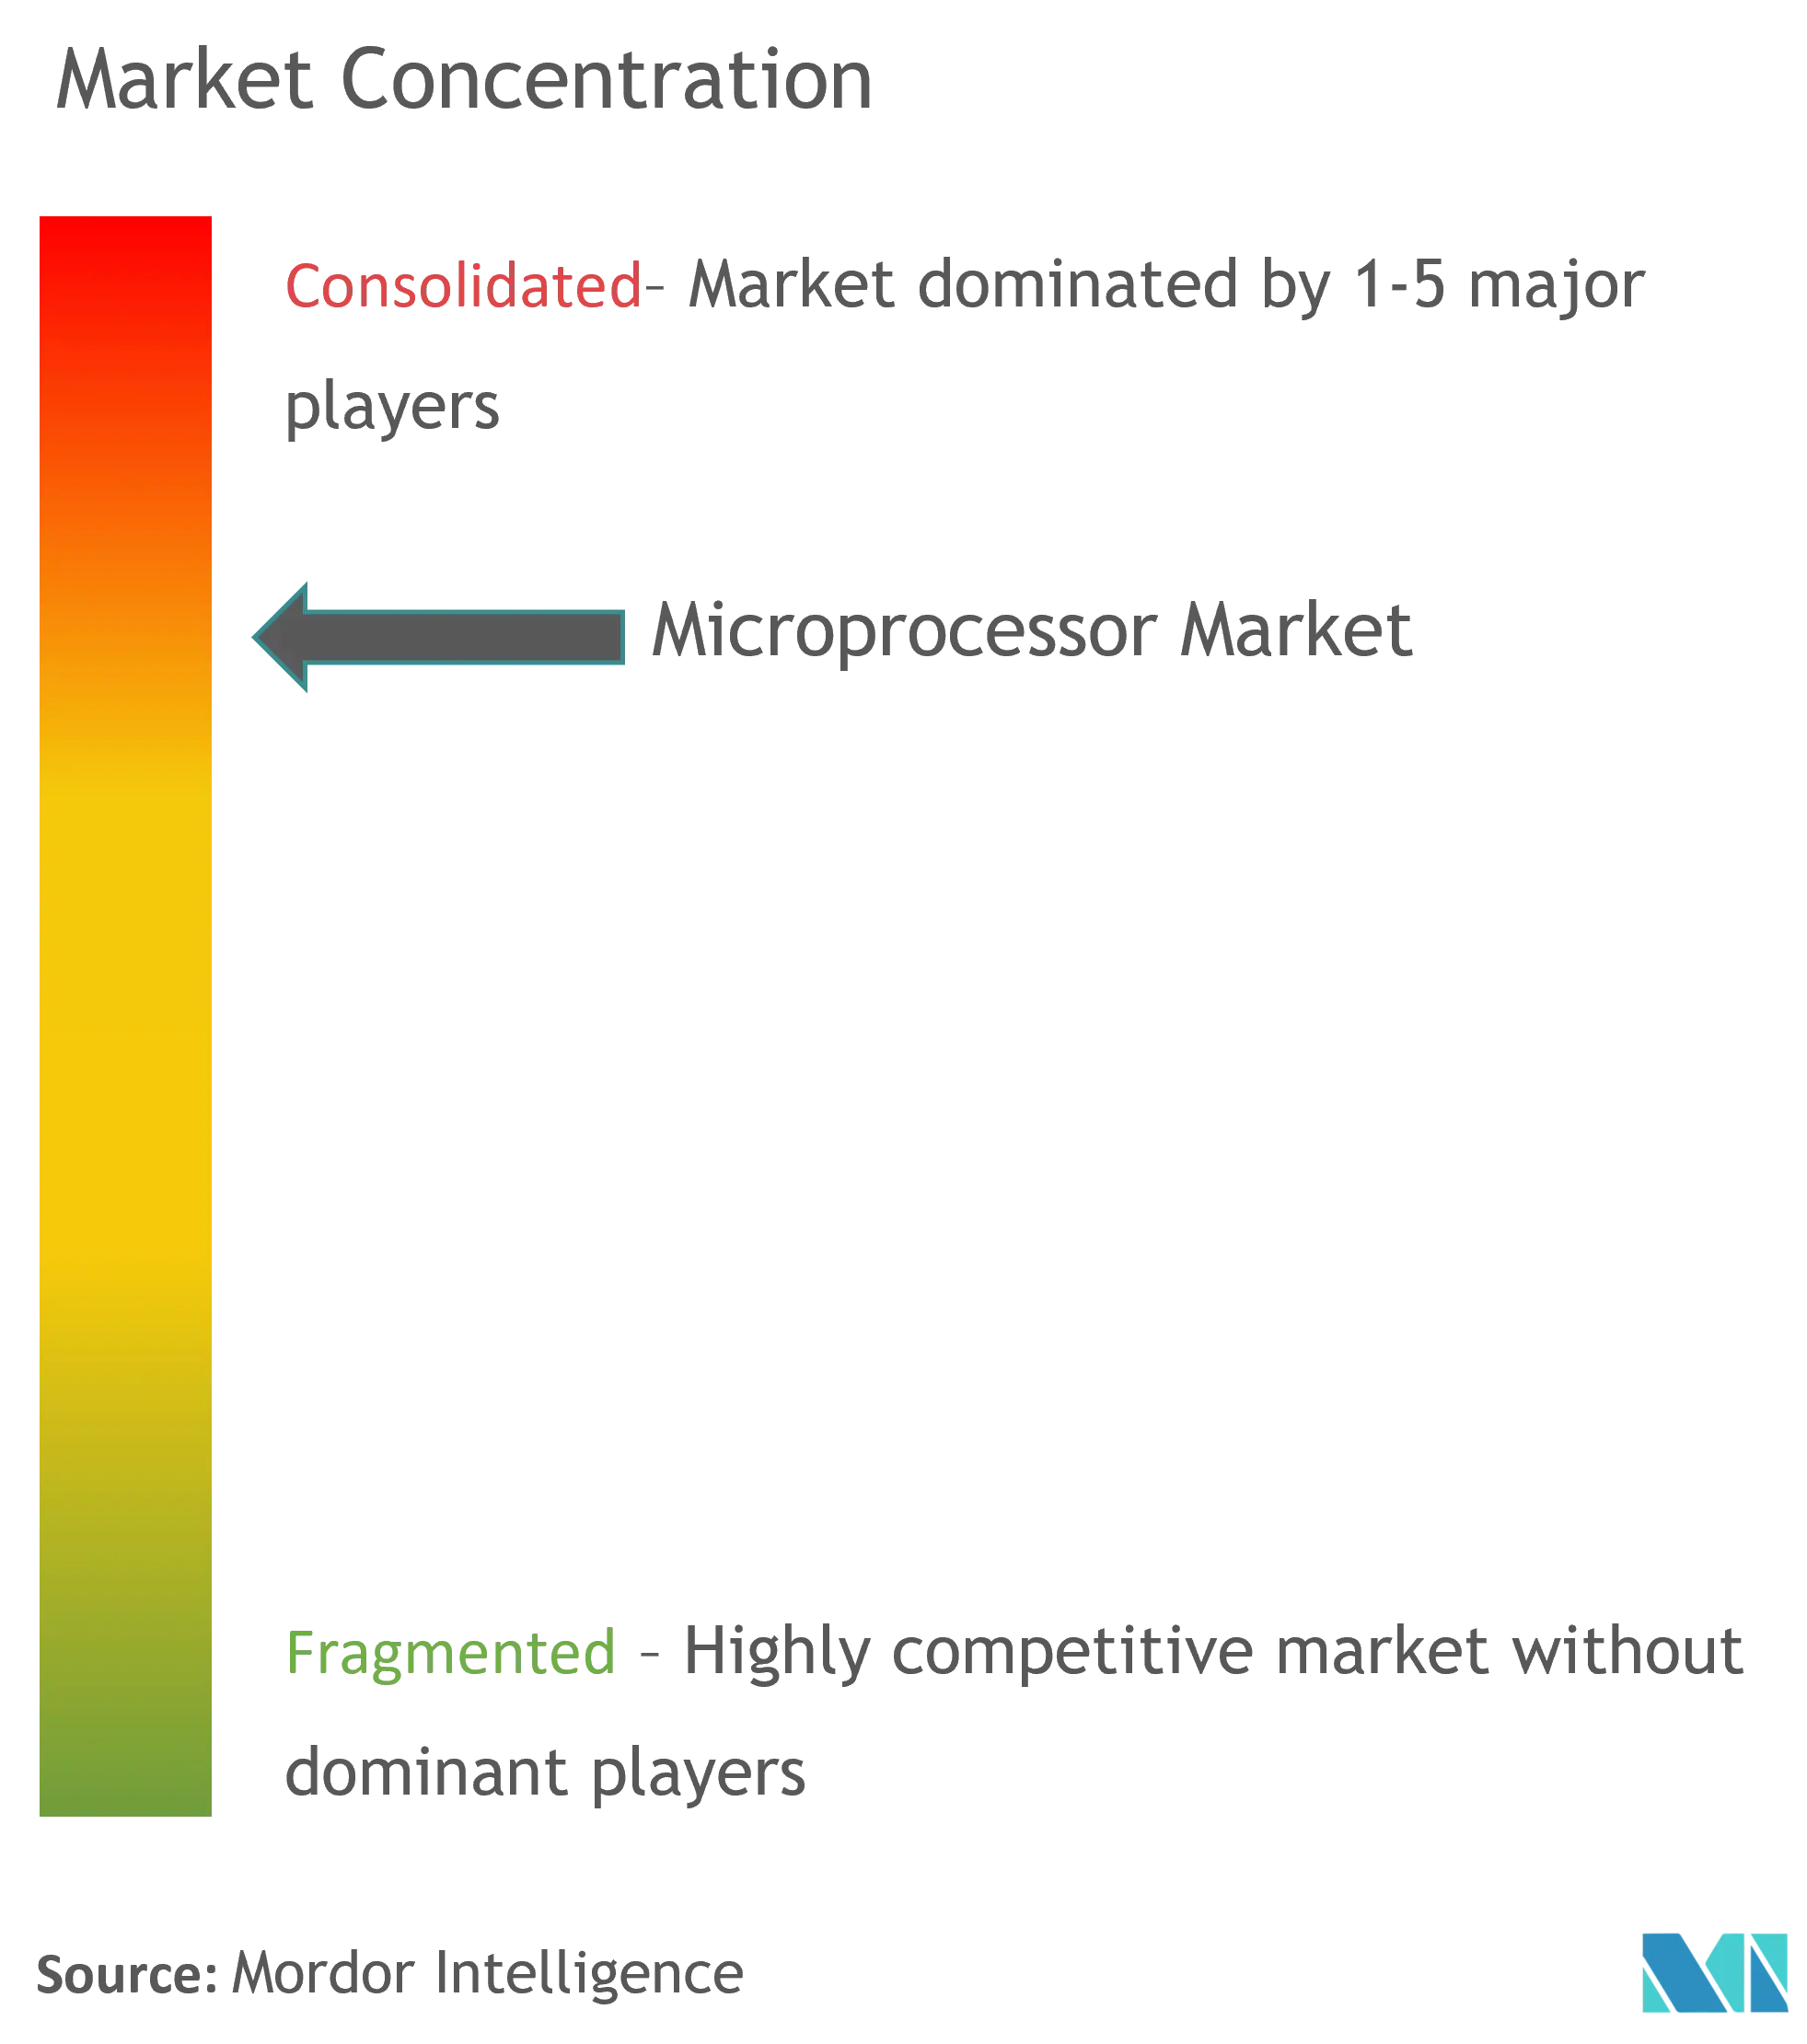 Microprocessor Market Concentration